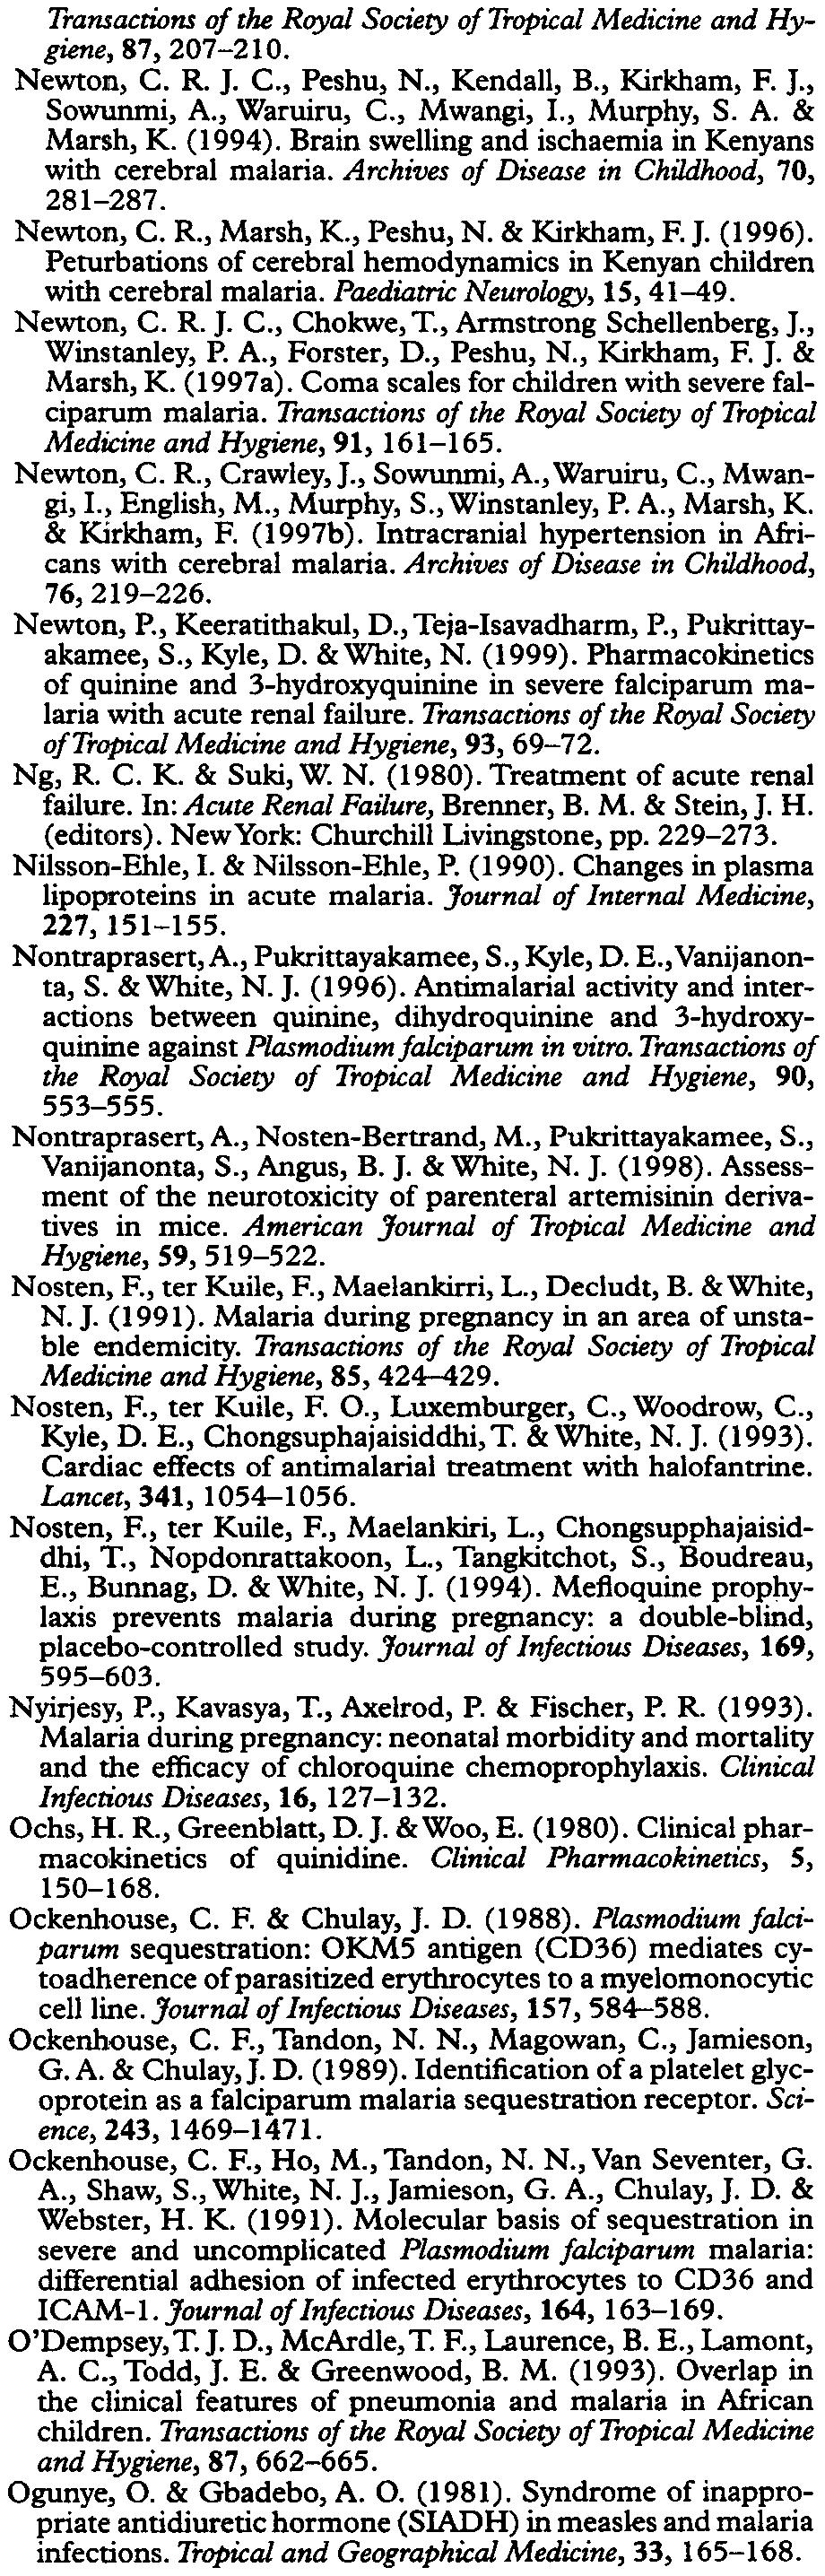 , Bleichrodt, N. & van Hensbroek, M. B. (1996). Absence of neuropsychological sequelae following cerebral malaria in Gambian children.